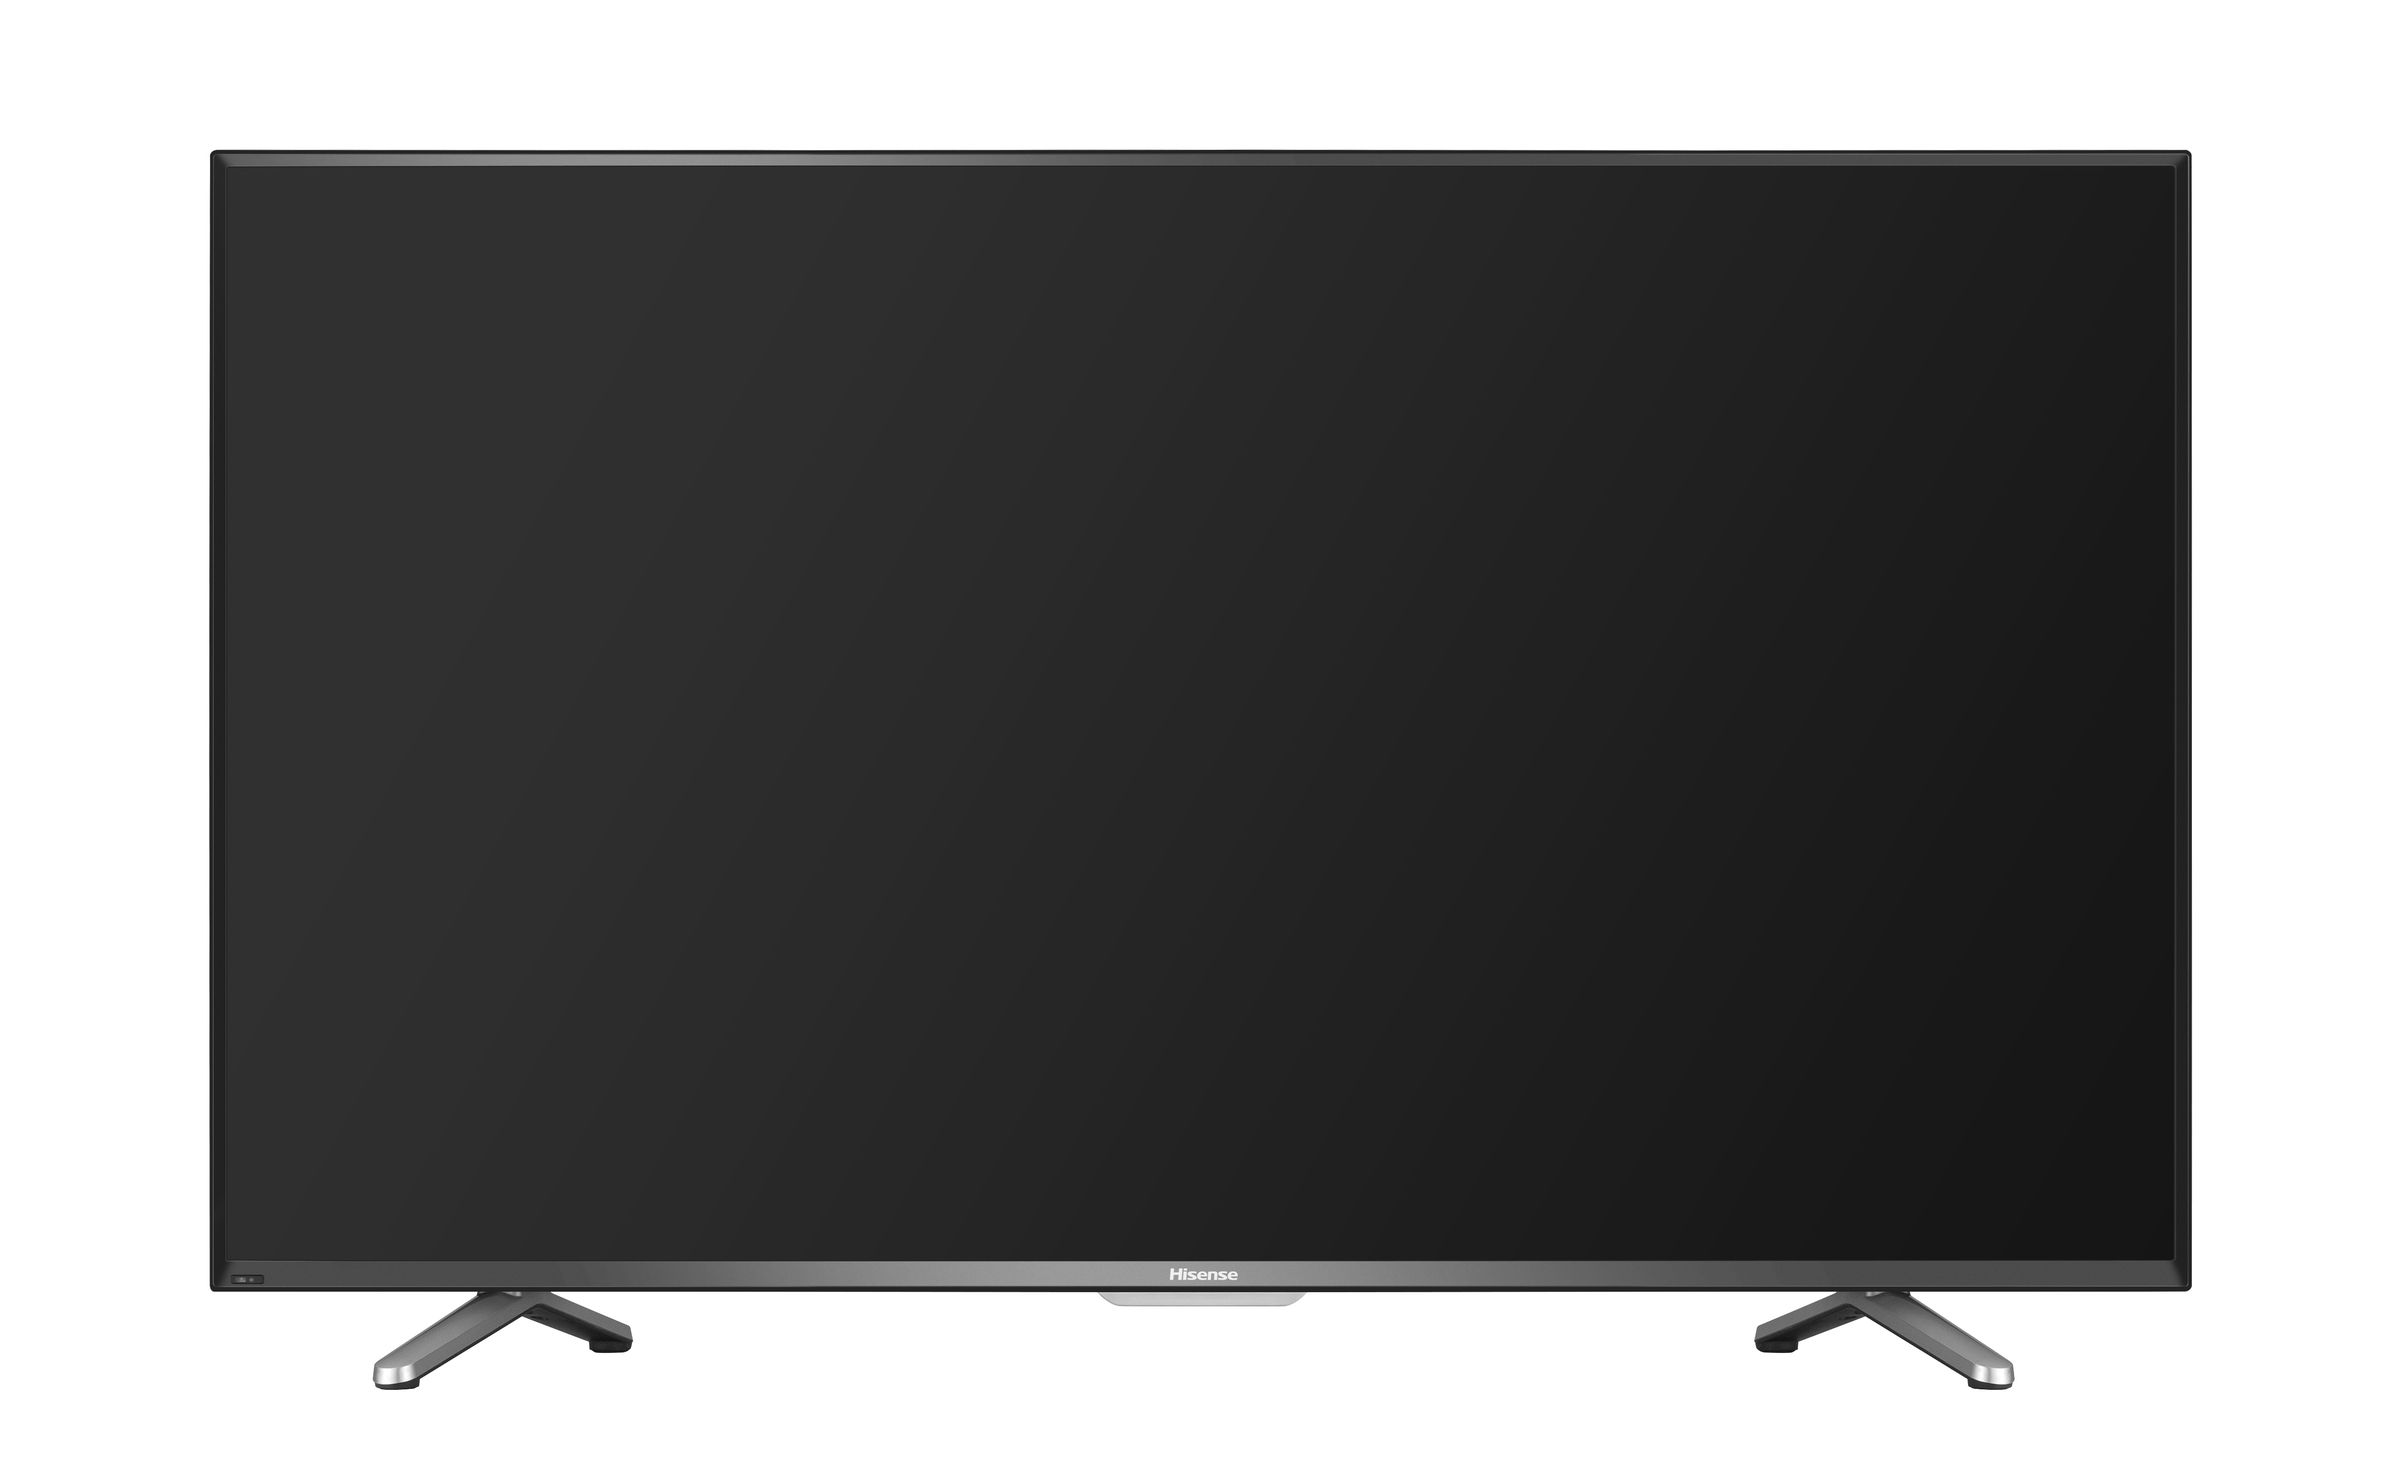 Hisense TVs at CES 2016